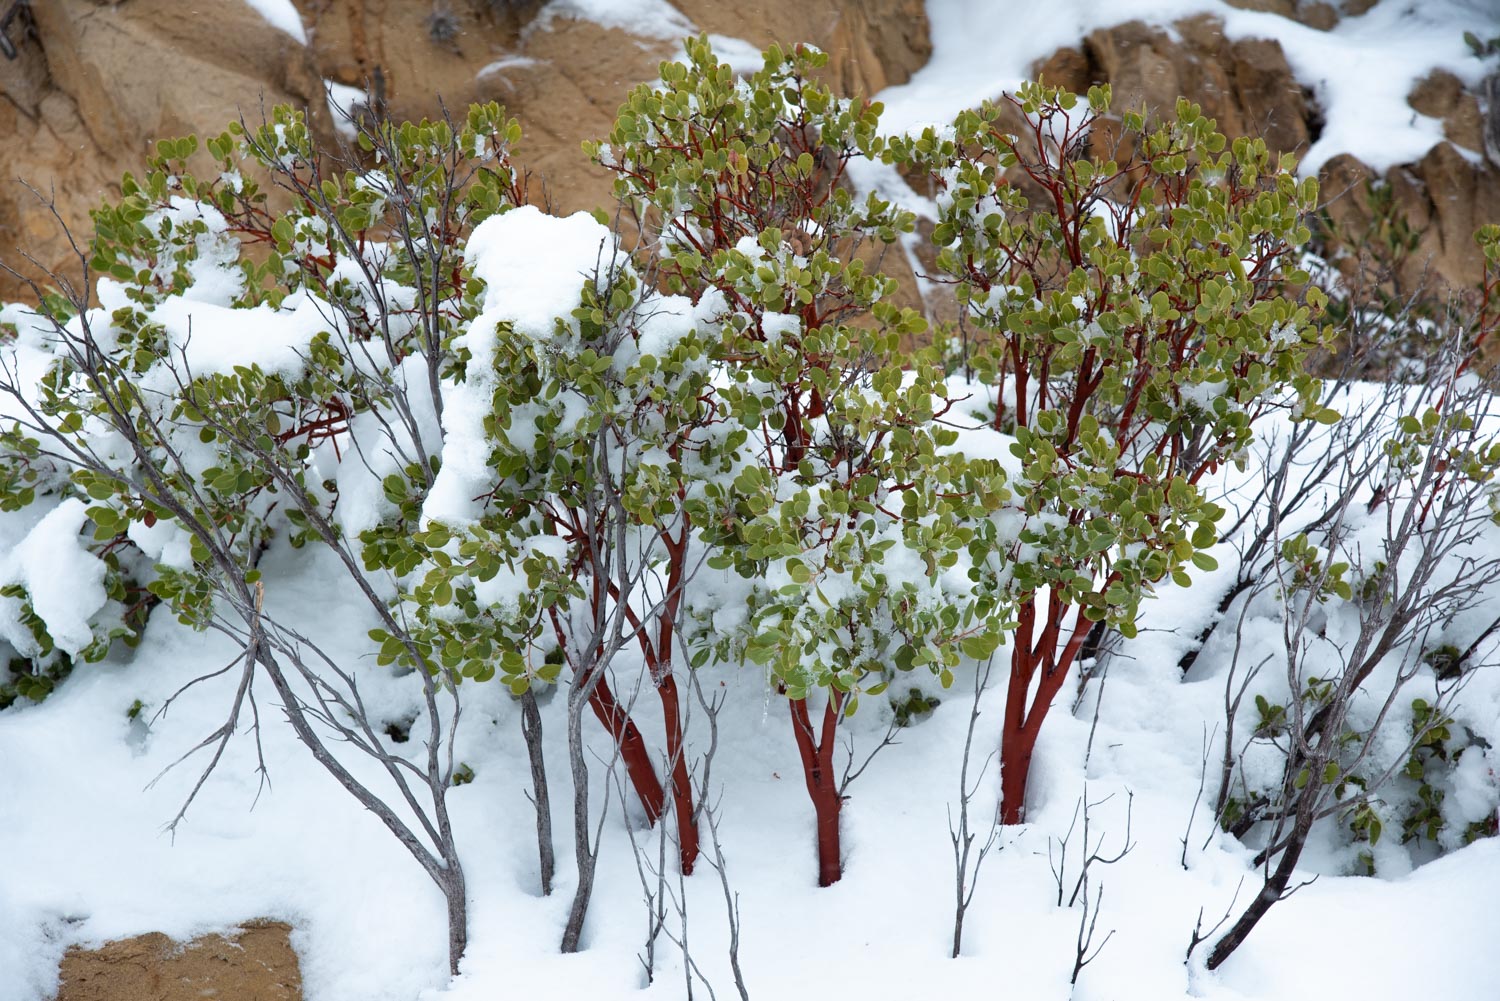 Manzanita (Arctostaphylos sp.) in the Snow